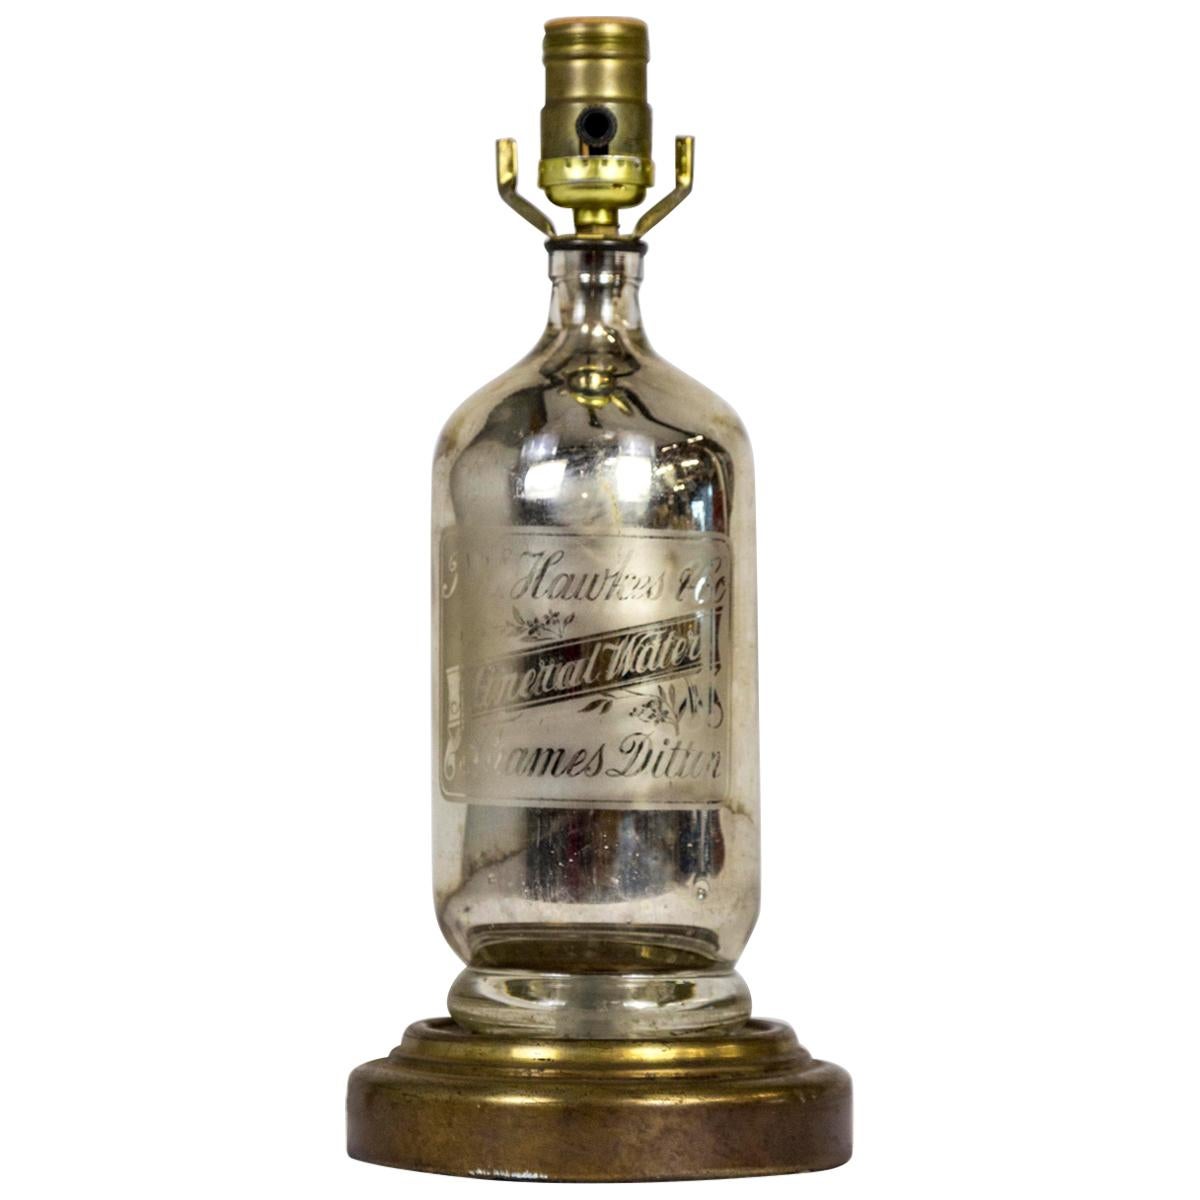 Antique Etched 'J.H. Hawkes' Mercury Glass Bottle Lamp on Gilt Base